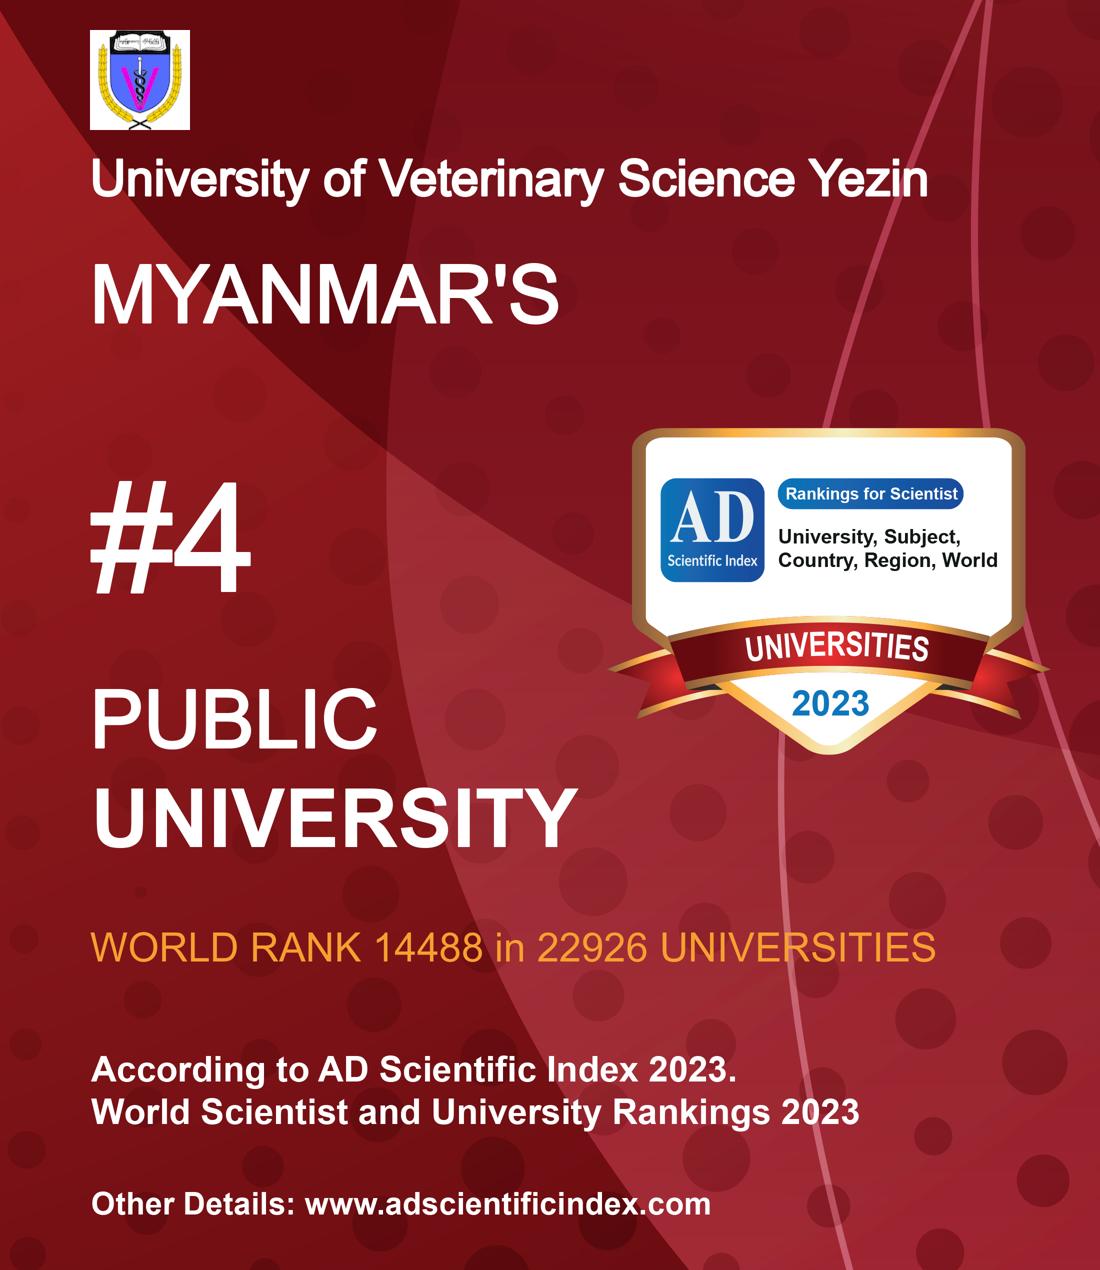 University of Veterinary Science Yezin